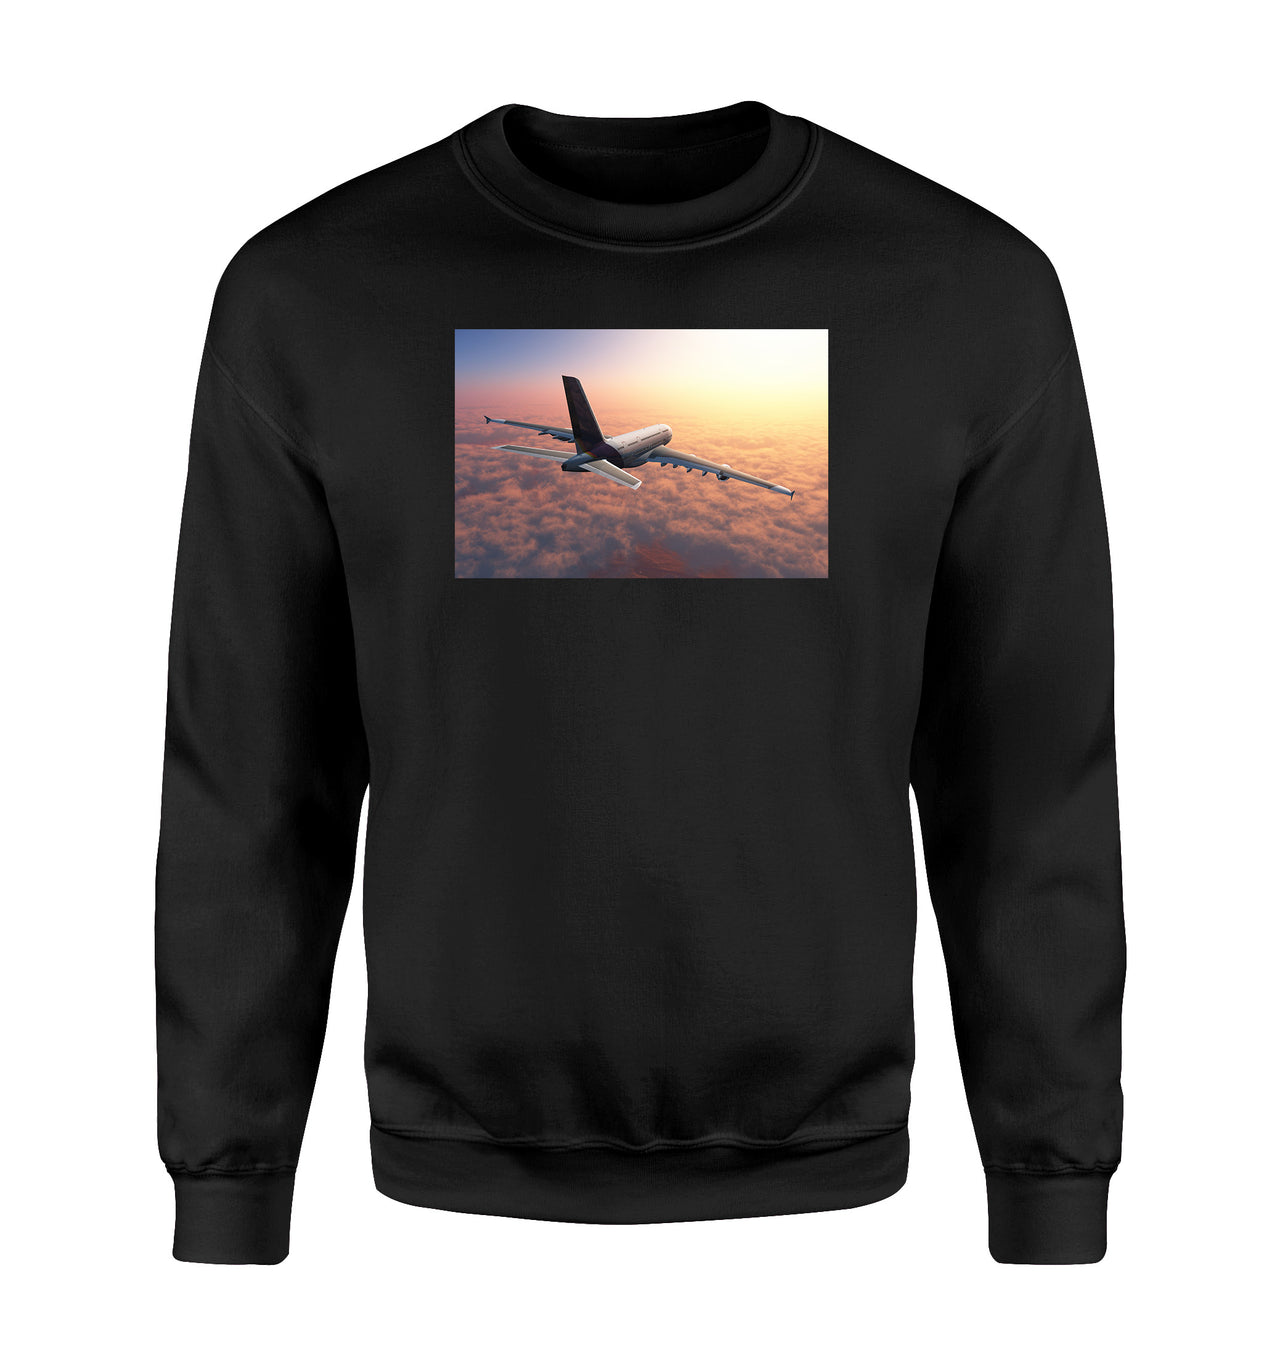 Super Cruising Airbus A380 over Clouds Designed Sweatshirts